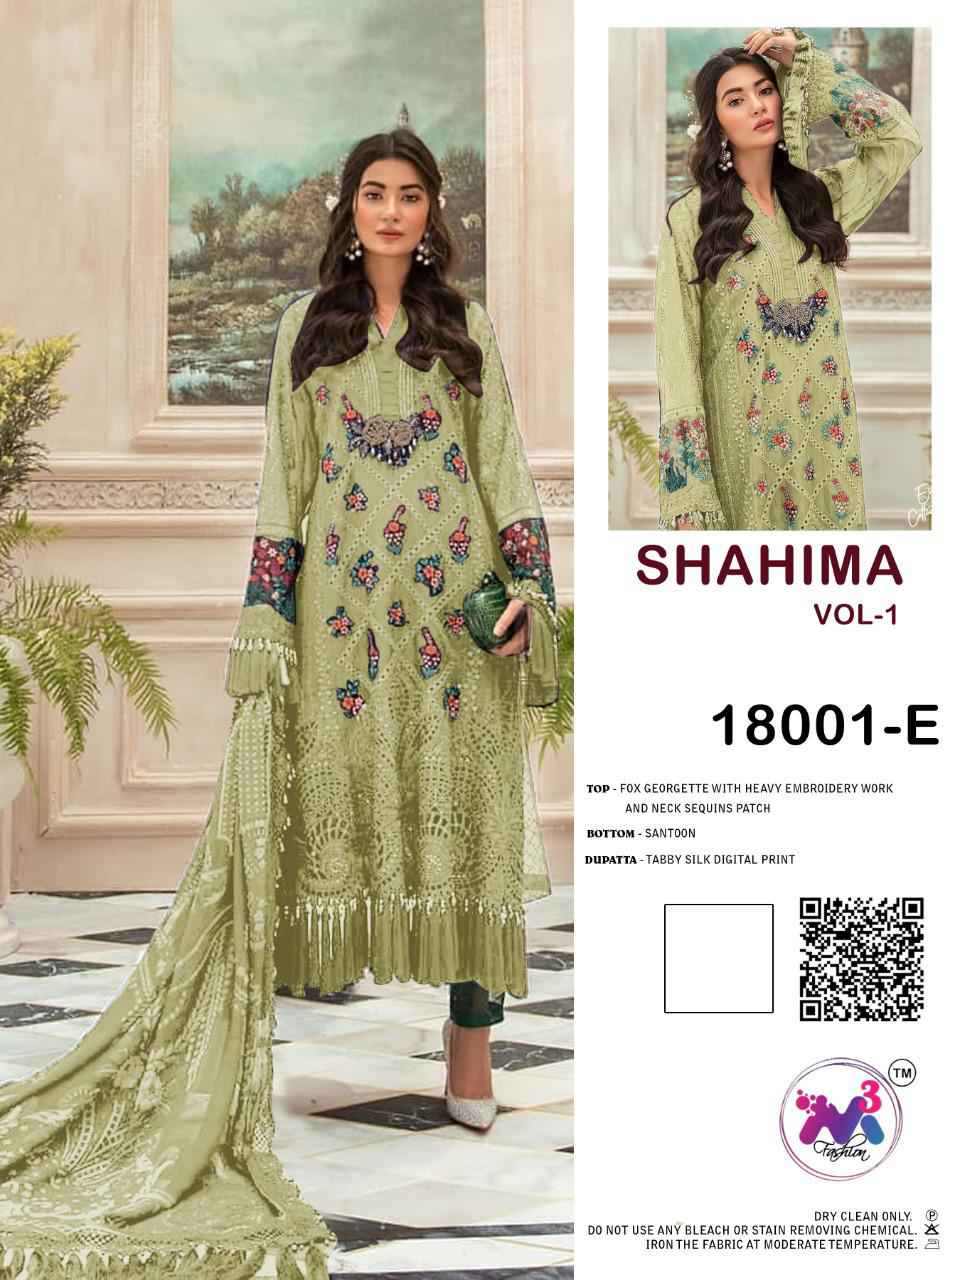 M3 Fashion Maria B Shahima Vol 1 Pakistani Salwar Suit New Collection in Wholesaler